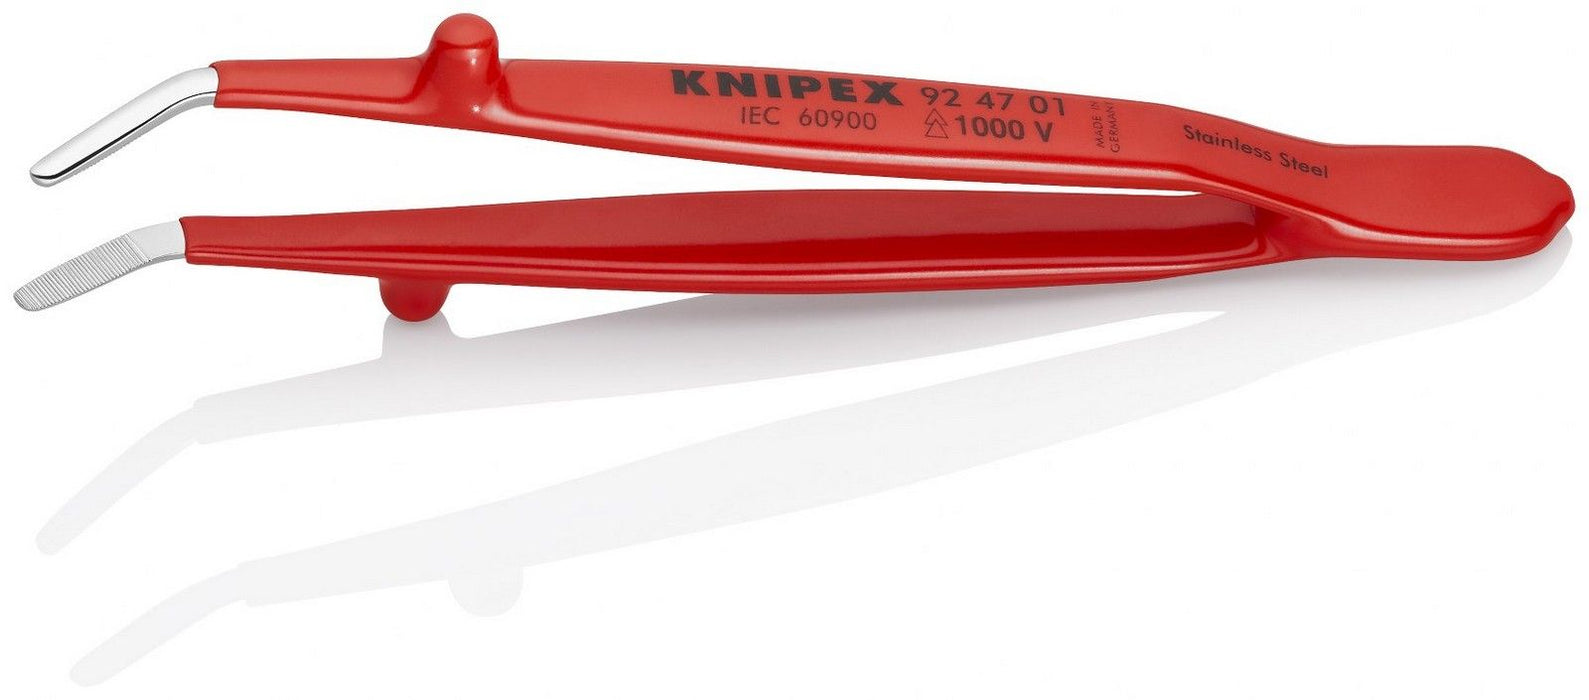 Knipex precizna pinceta - prava, 1000V VDE izolovana - pod 30° (92 47 01)